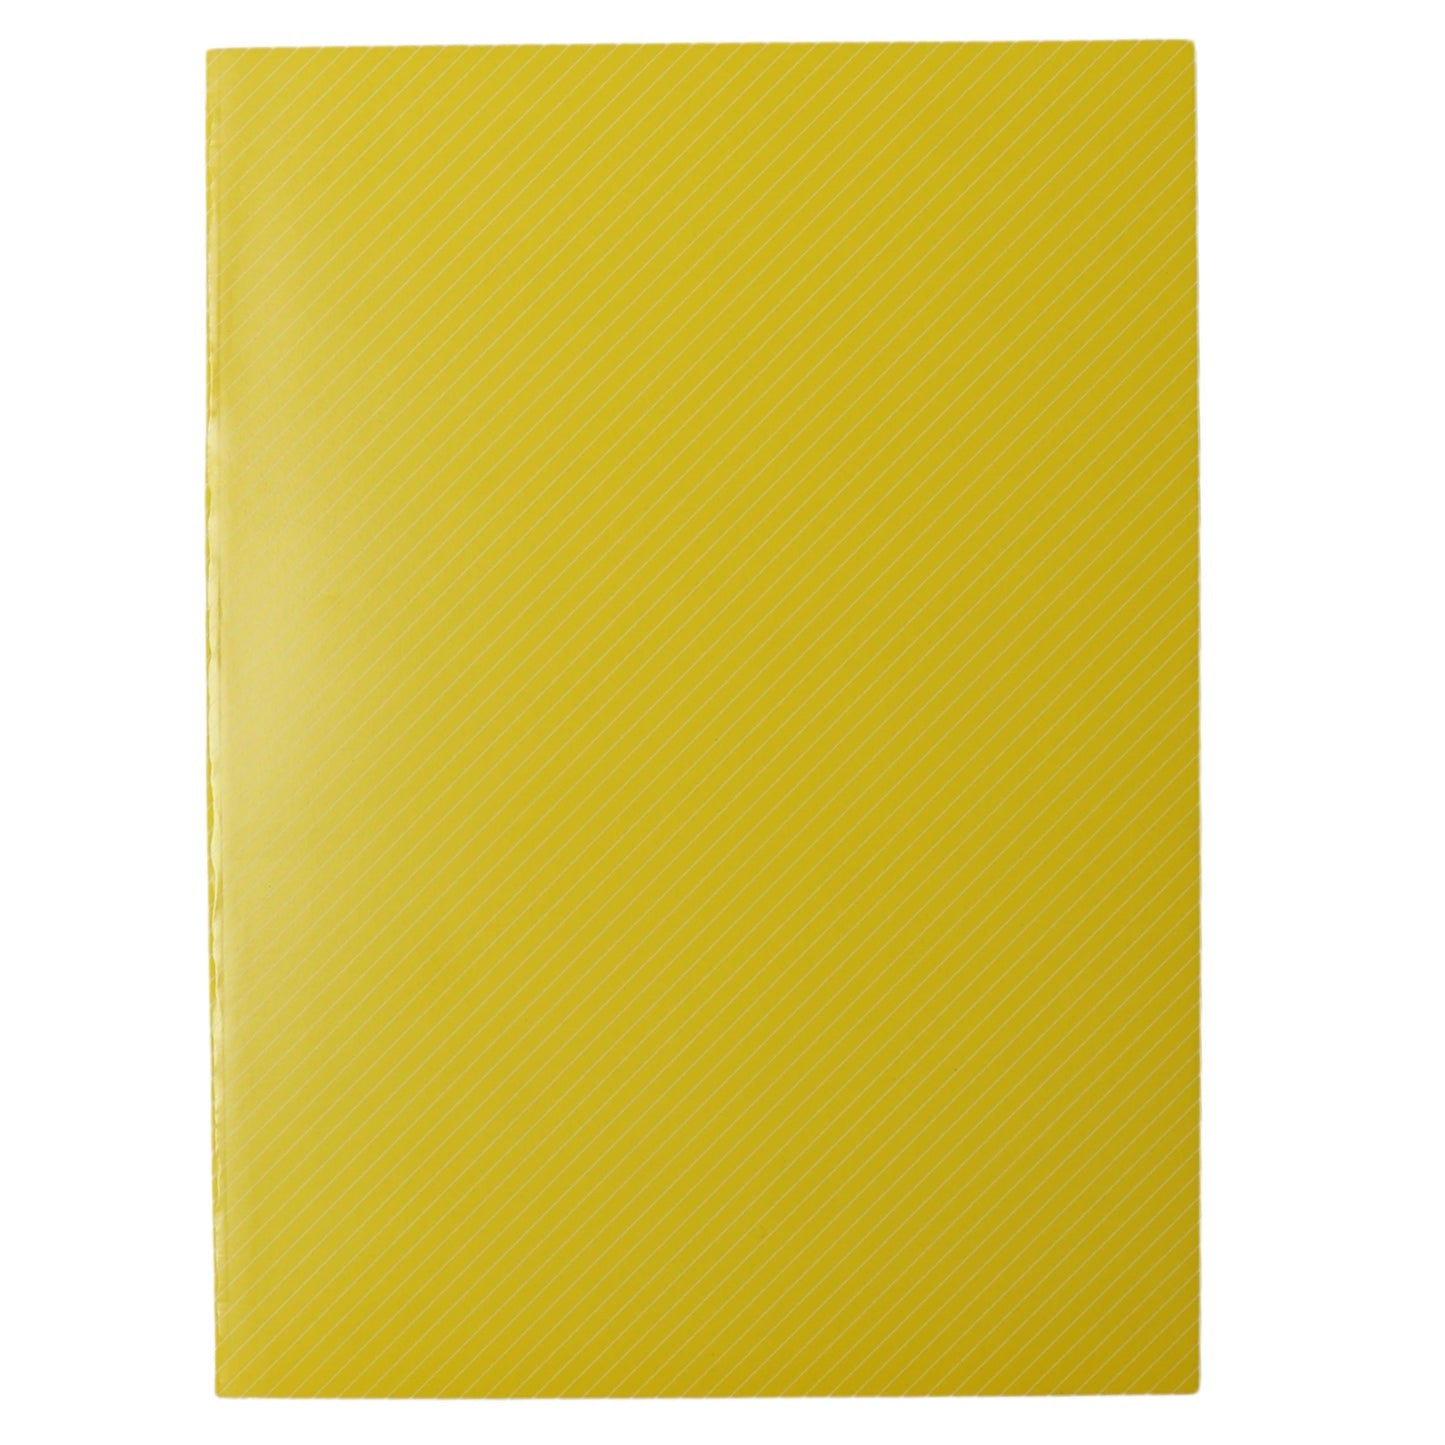 MATNI GROUP School Bags & Supplies Yellow MATNI GROUP -  University CopyBook 48 Sheets